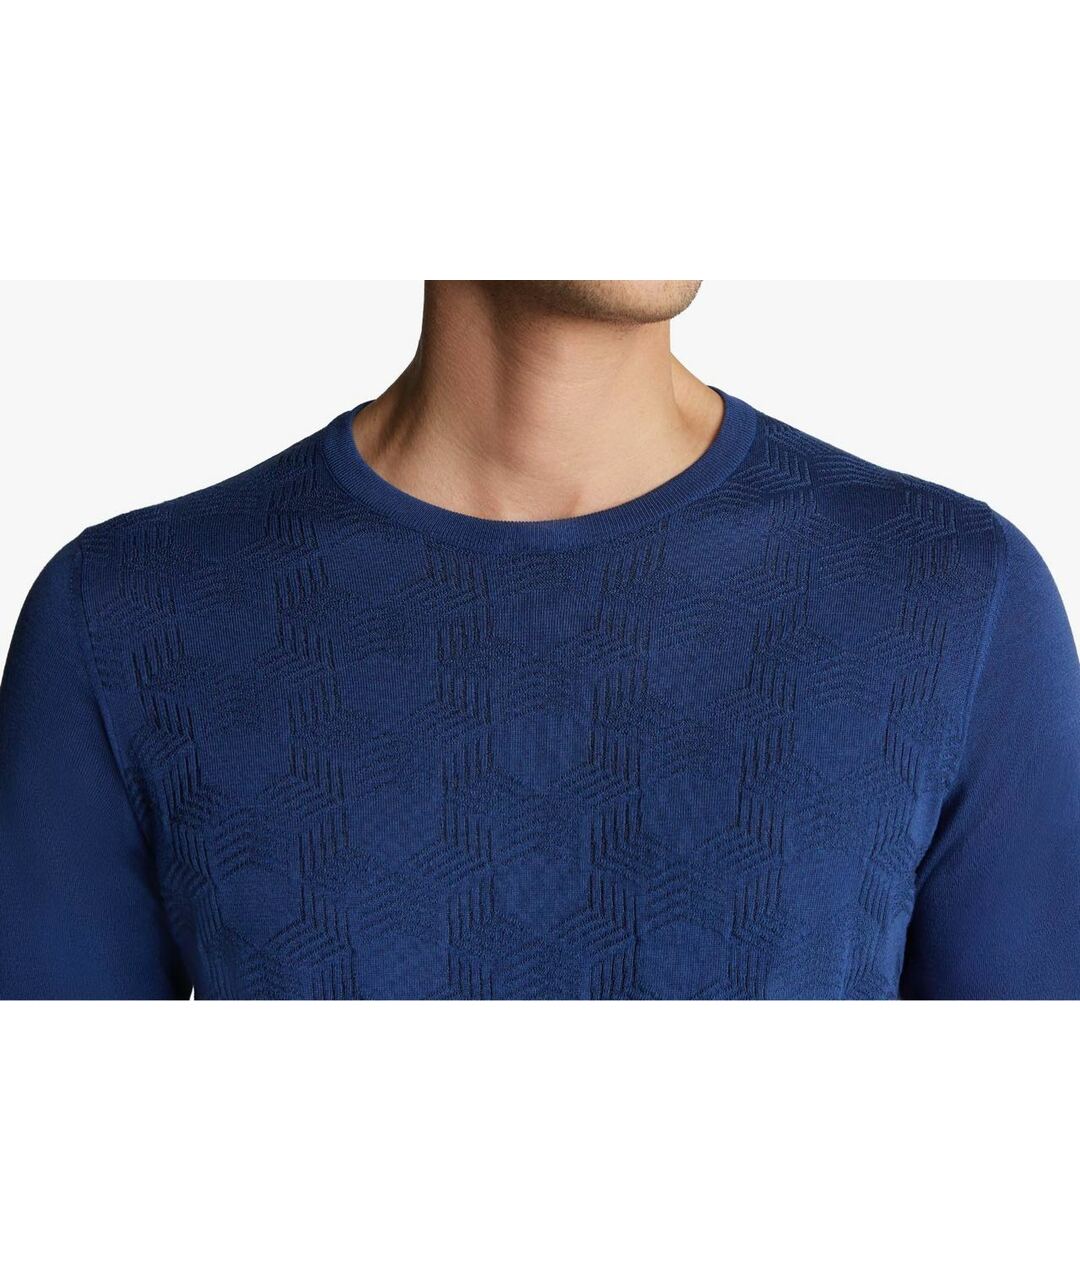 ZILLI Синий хлопковый джемпер / свитер, фото 2